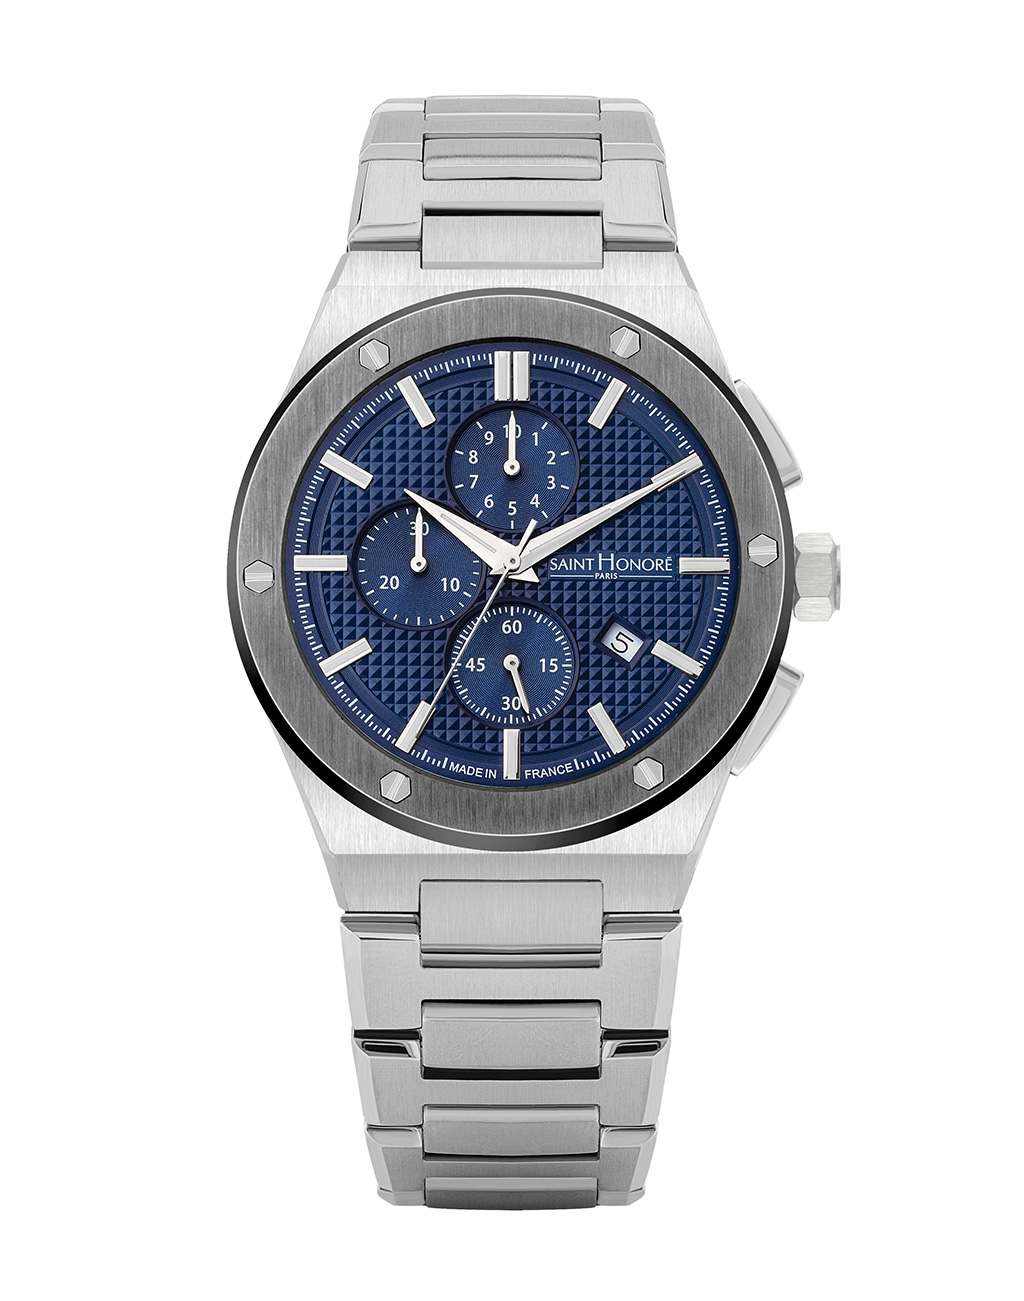 HAUSSMAN II Men's watch - stainless steel, blue dial, stainless steel strap